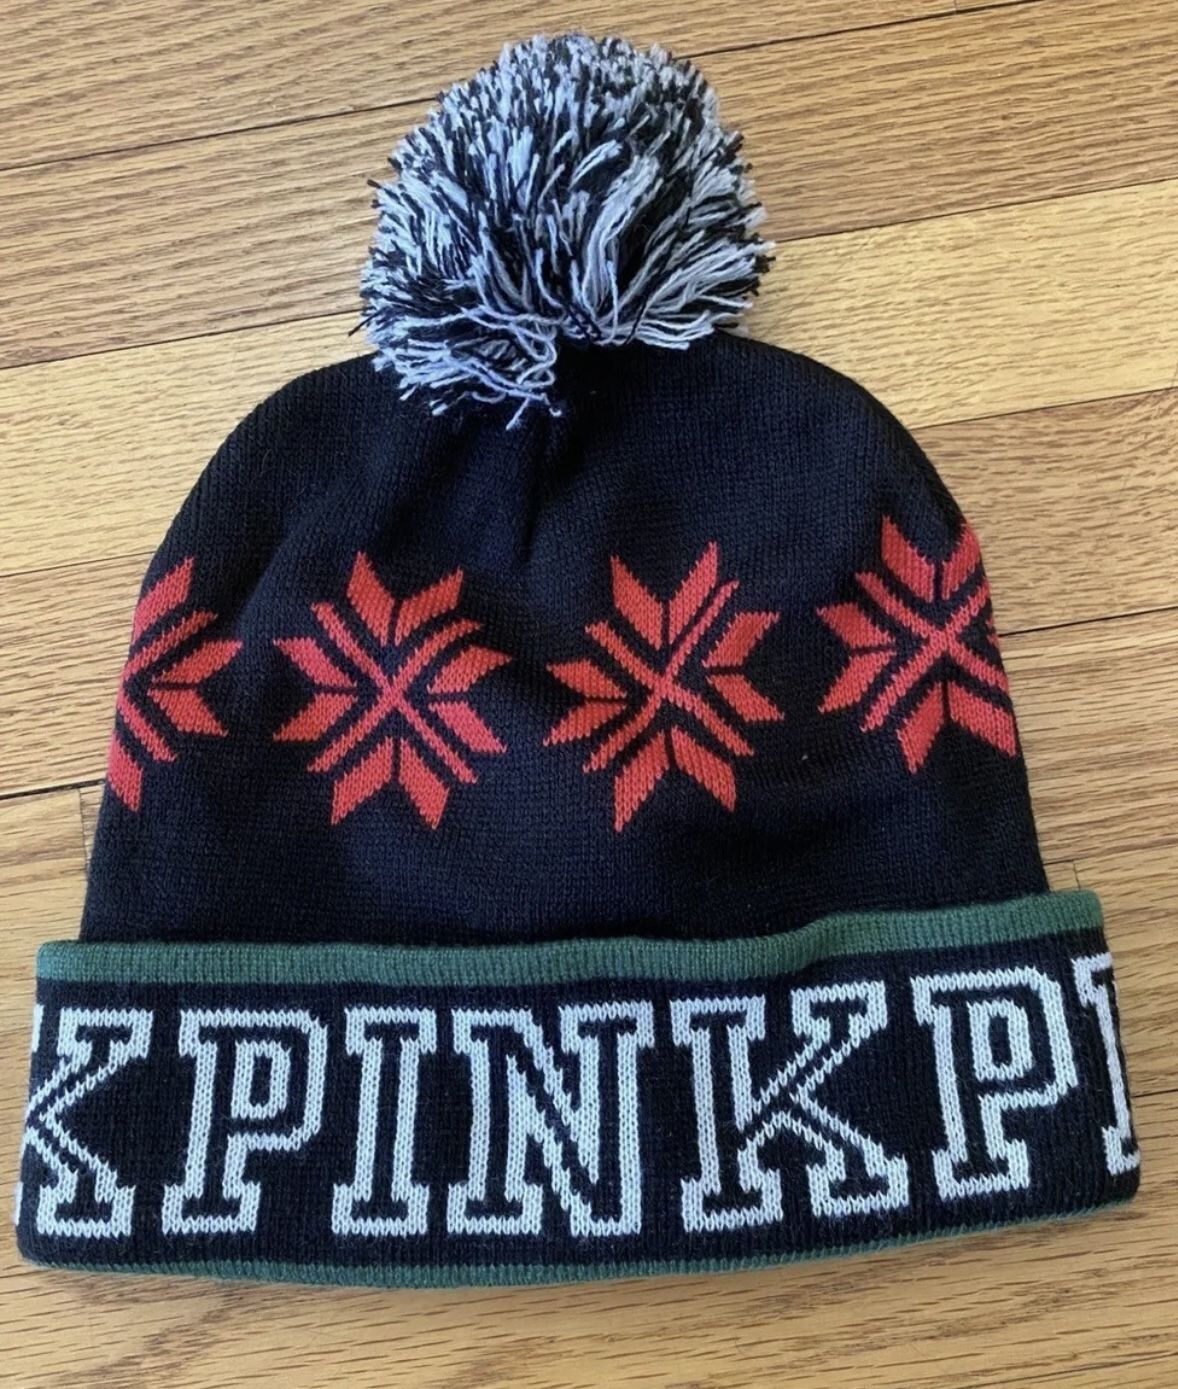 PINK Victoria’s Secret Pom Pom Hat OS Black Red Limited Edition Snowflake Beanie